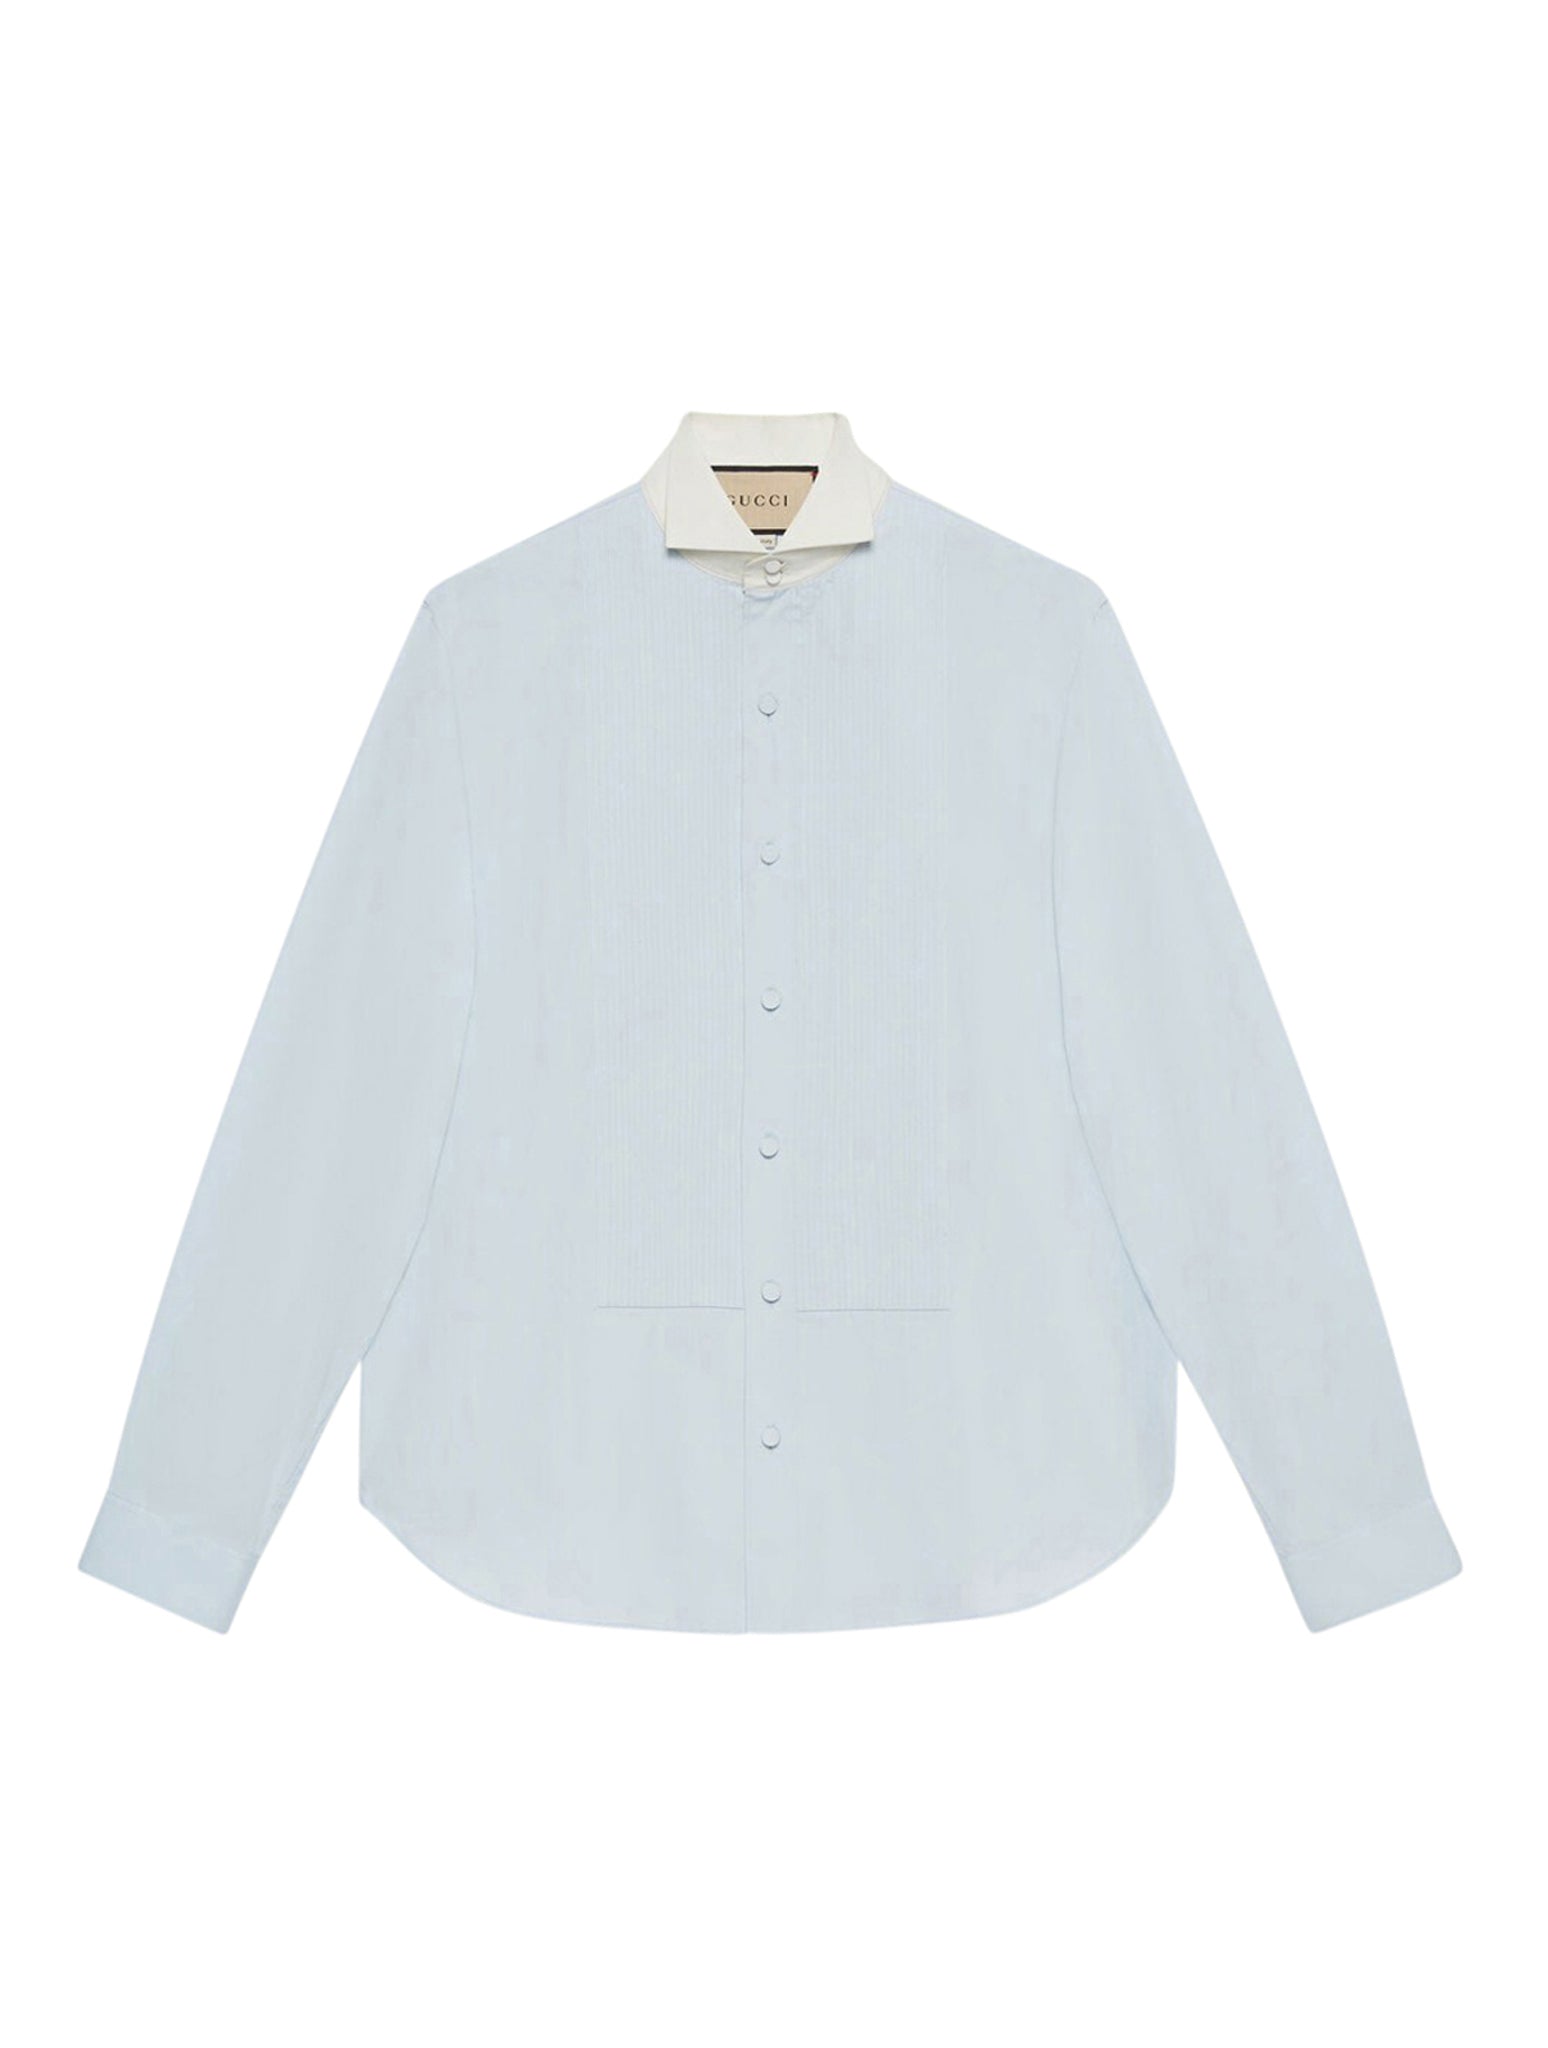 Squared shirt in cotton poplin